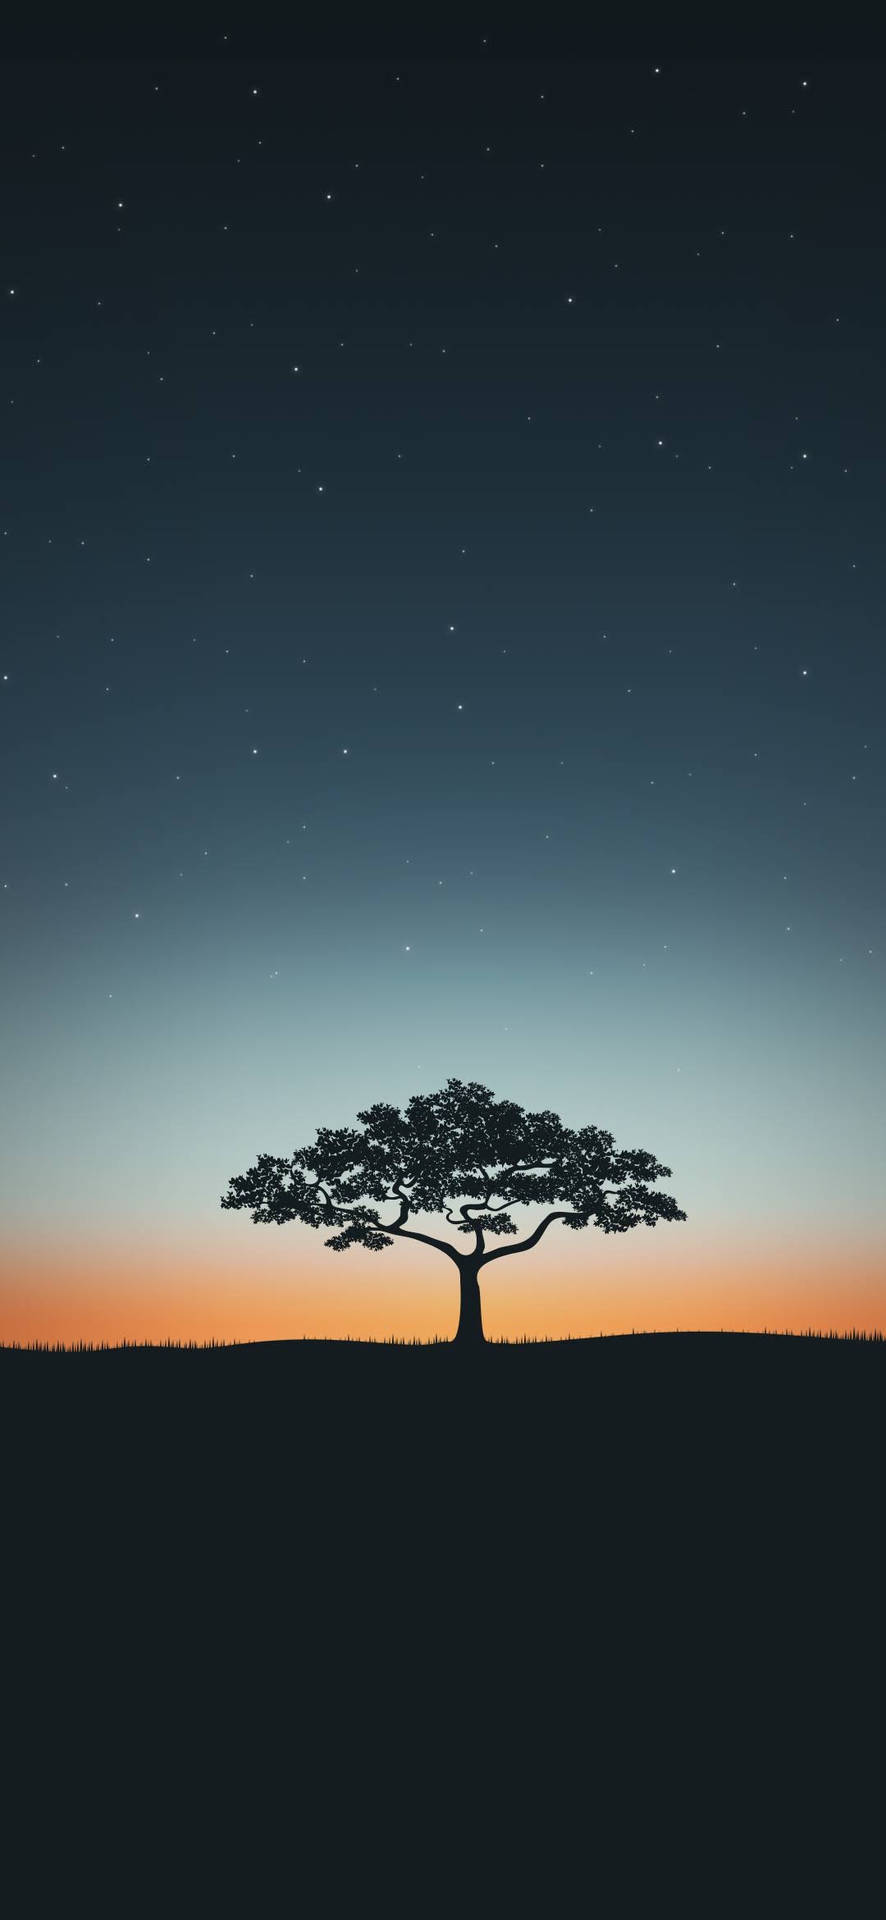 Tree Silhouette Iphone 2021 Wallpaper